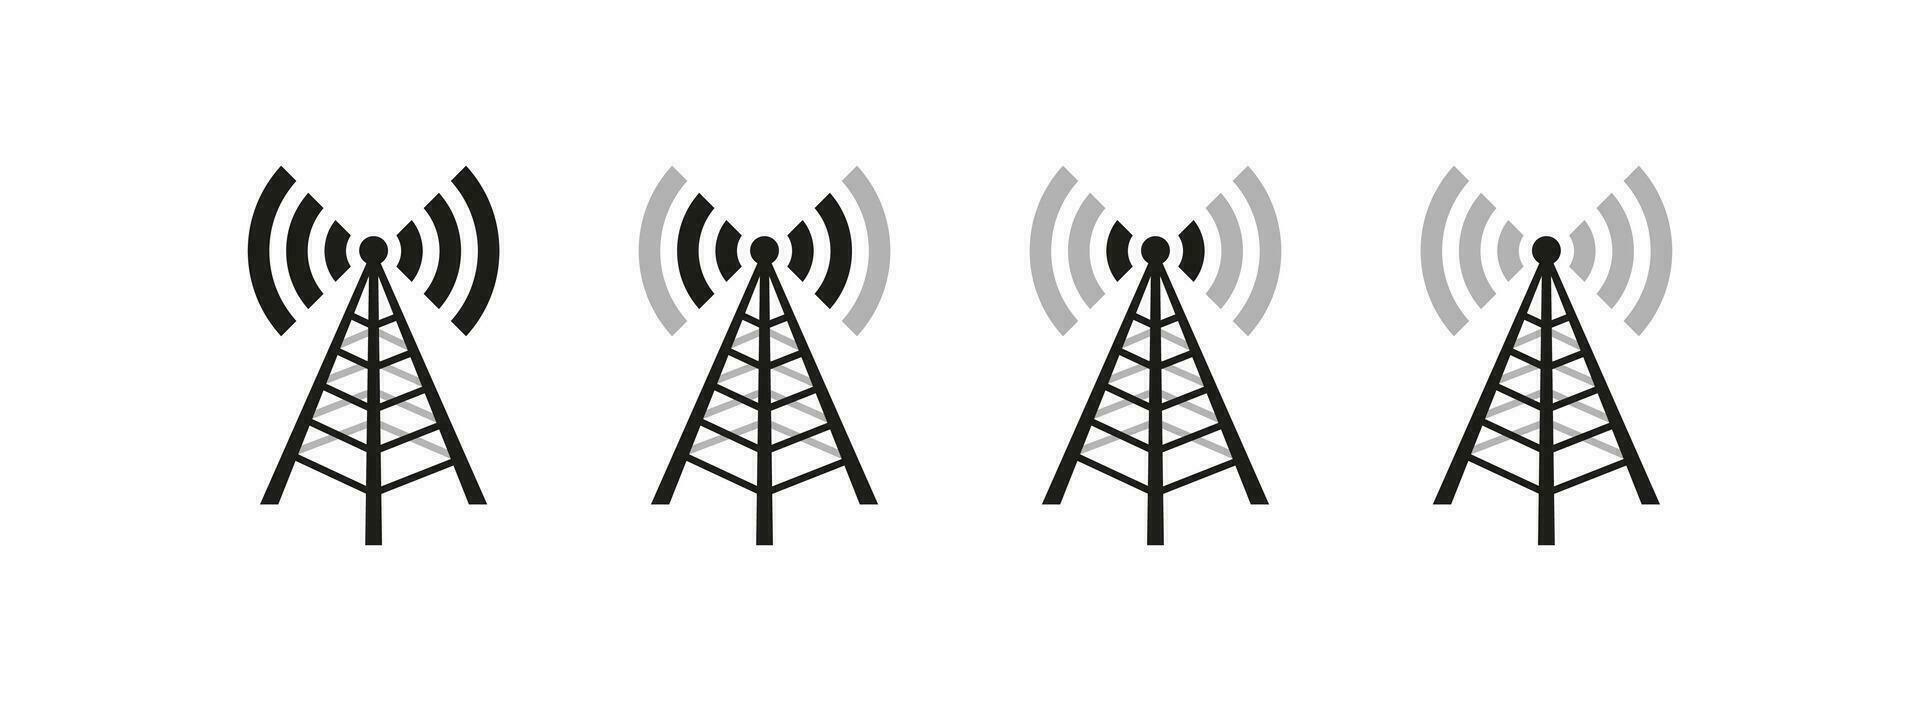 Sender Antenne Symbol Satz. Signal Antenne Vektor